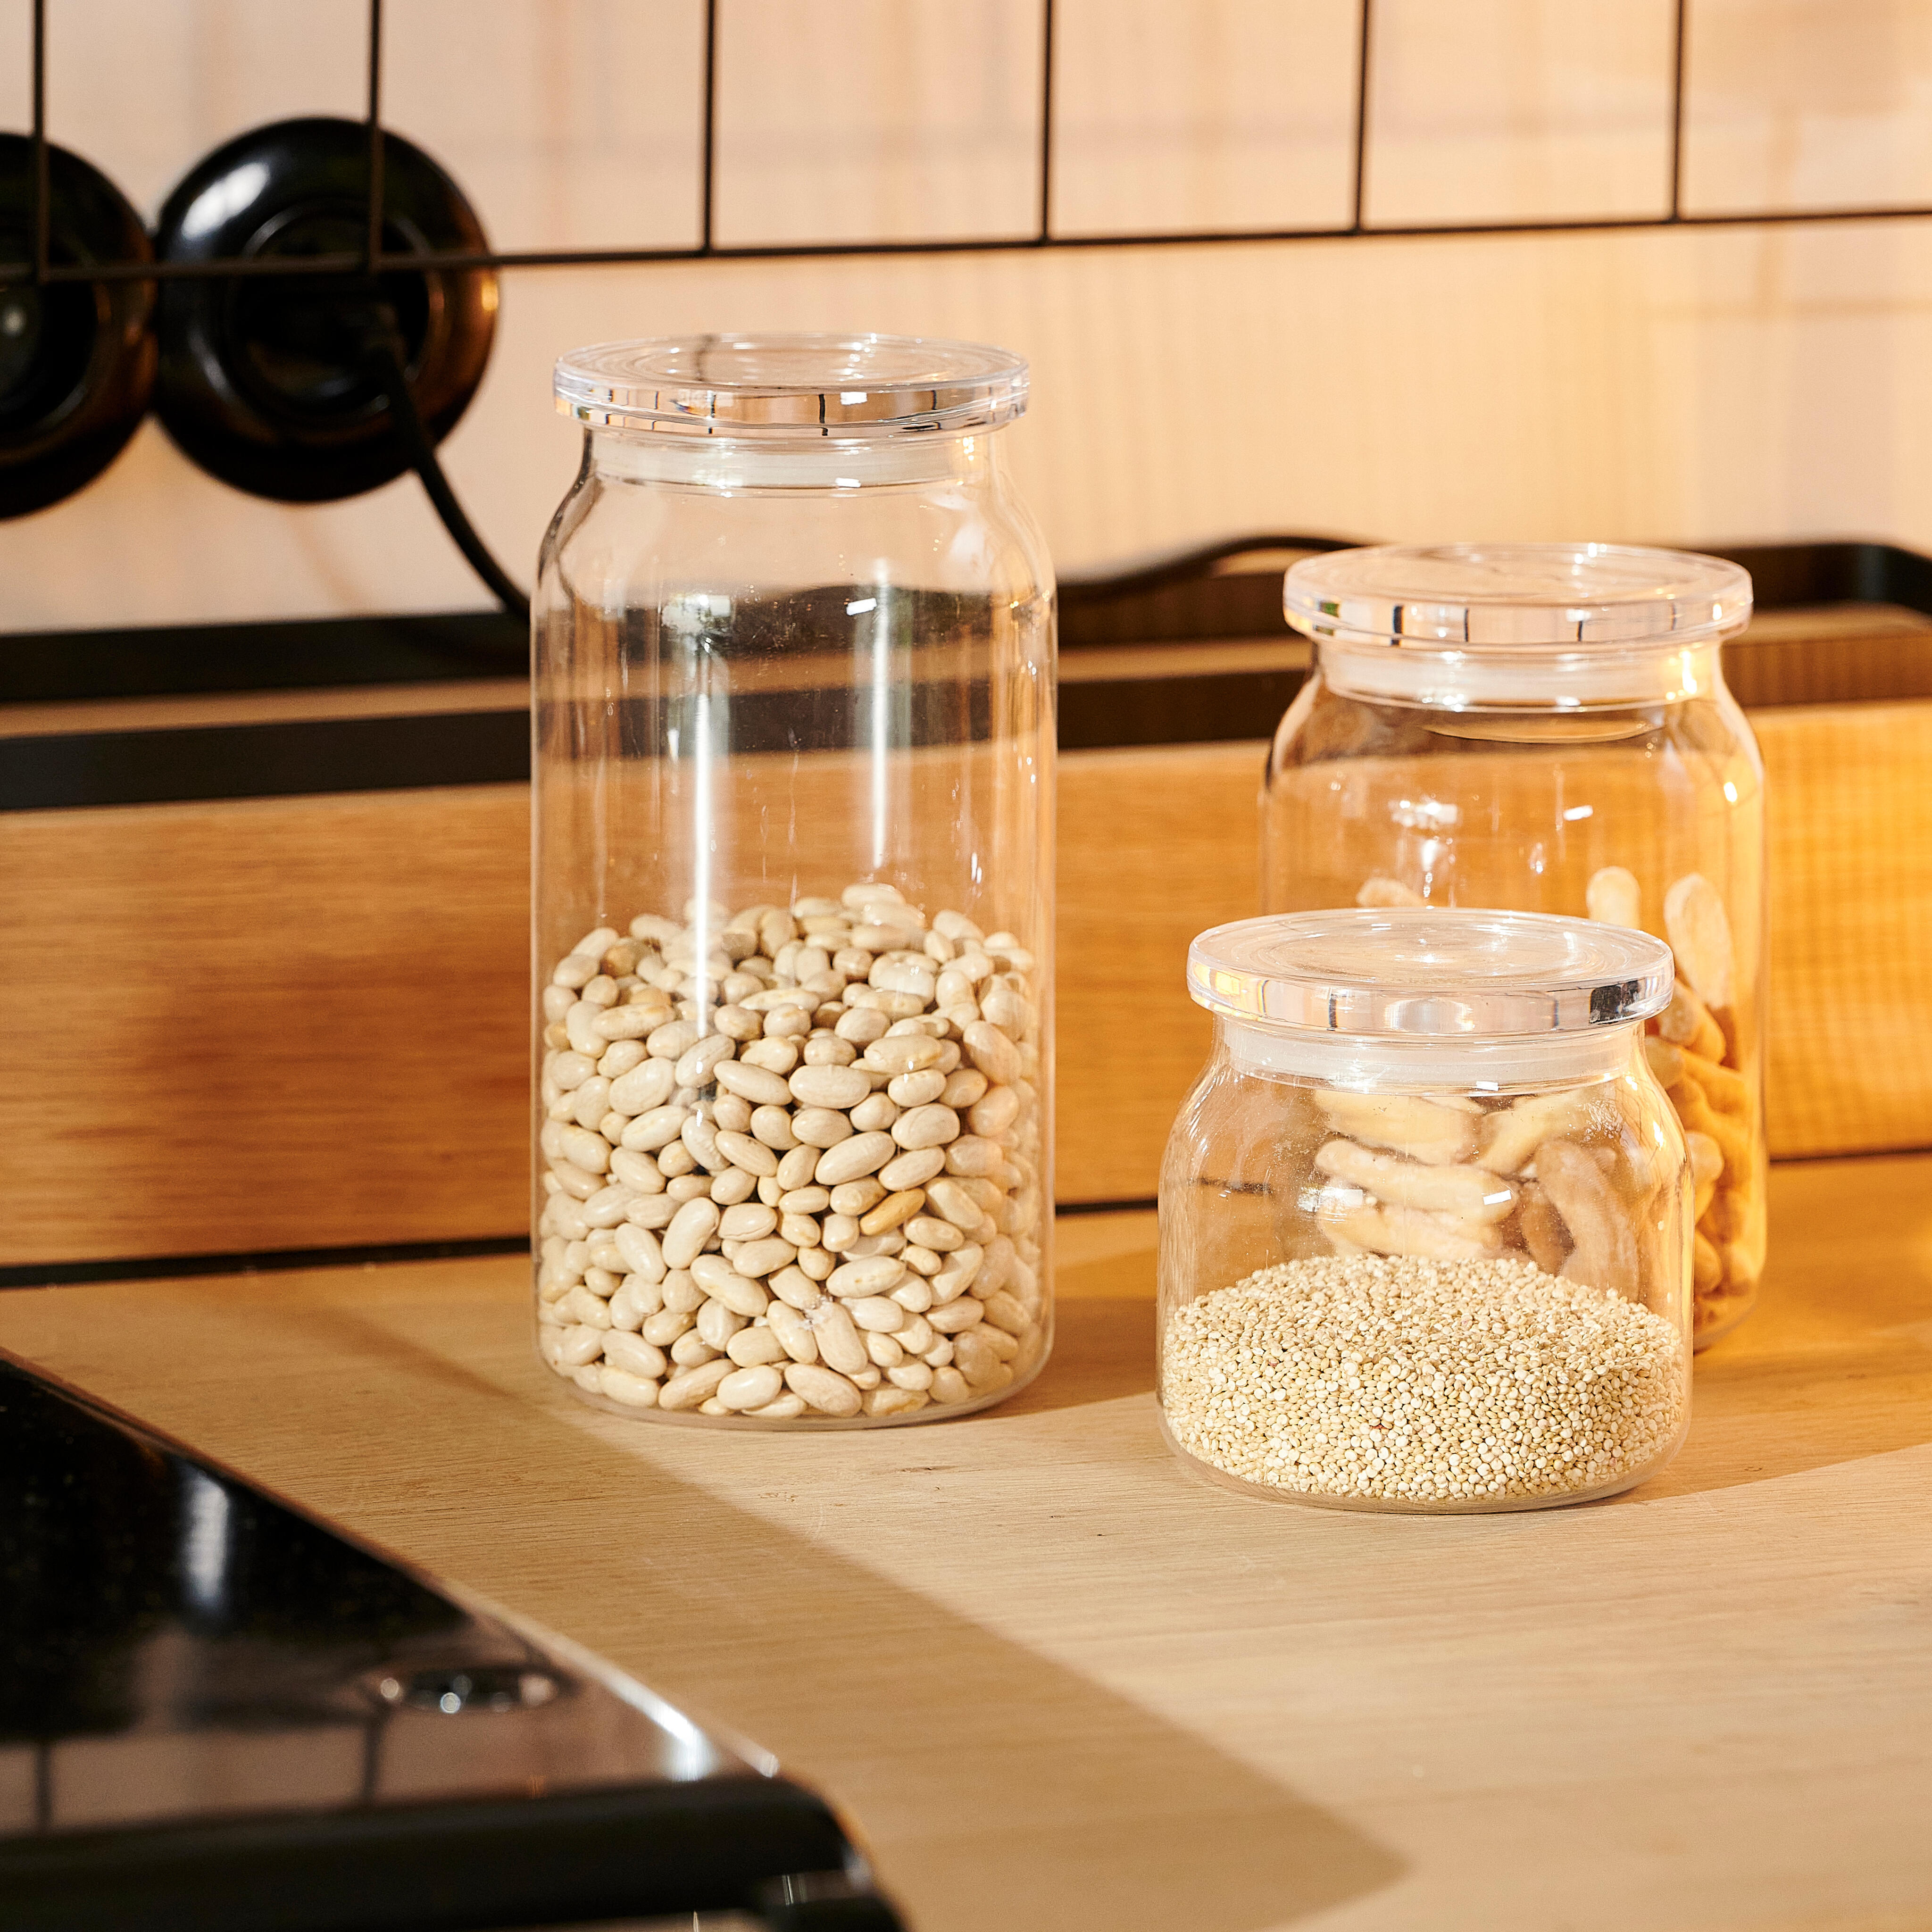 Tarros para alimentos en la cocina - Decorar Hogar  Glass jars with lids,  Kitchen jars storage, Glass kitchen canisters